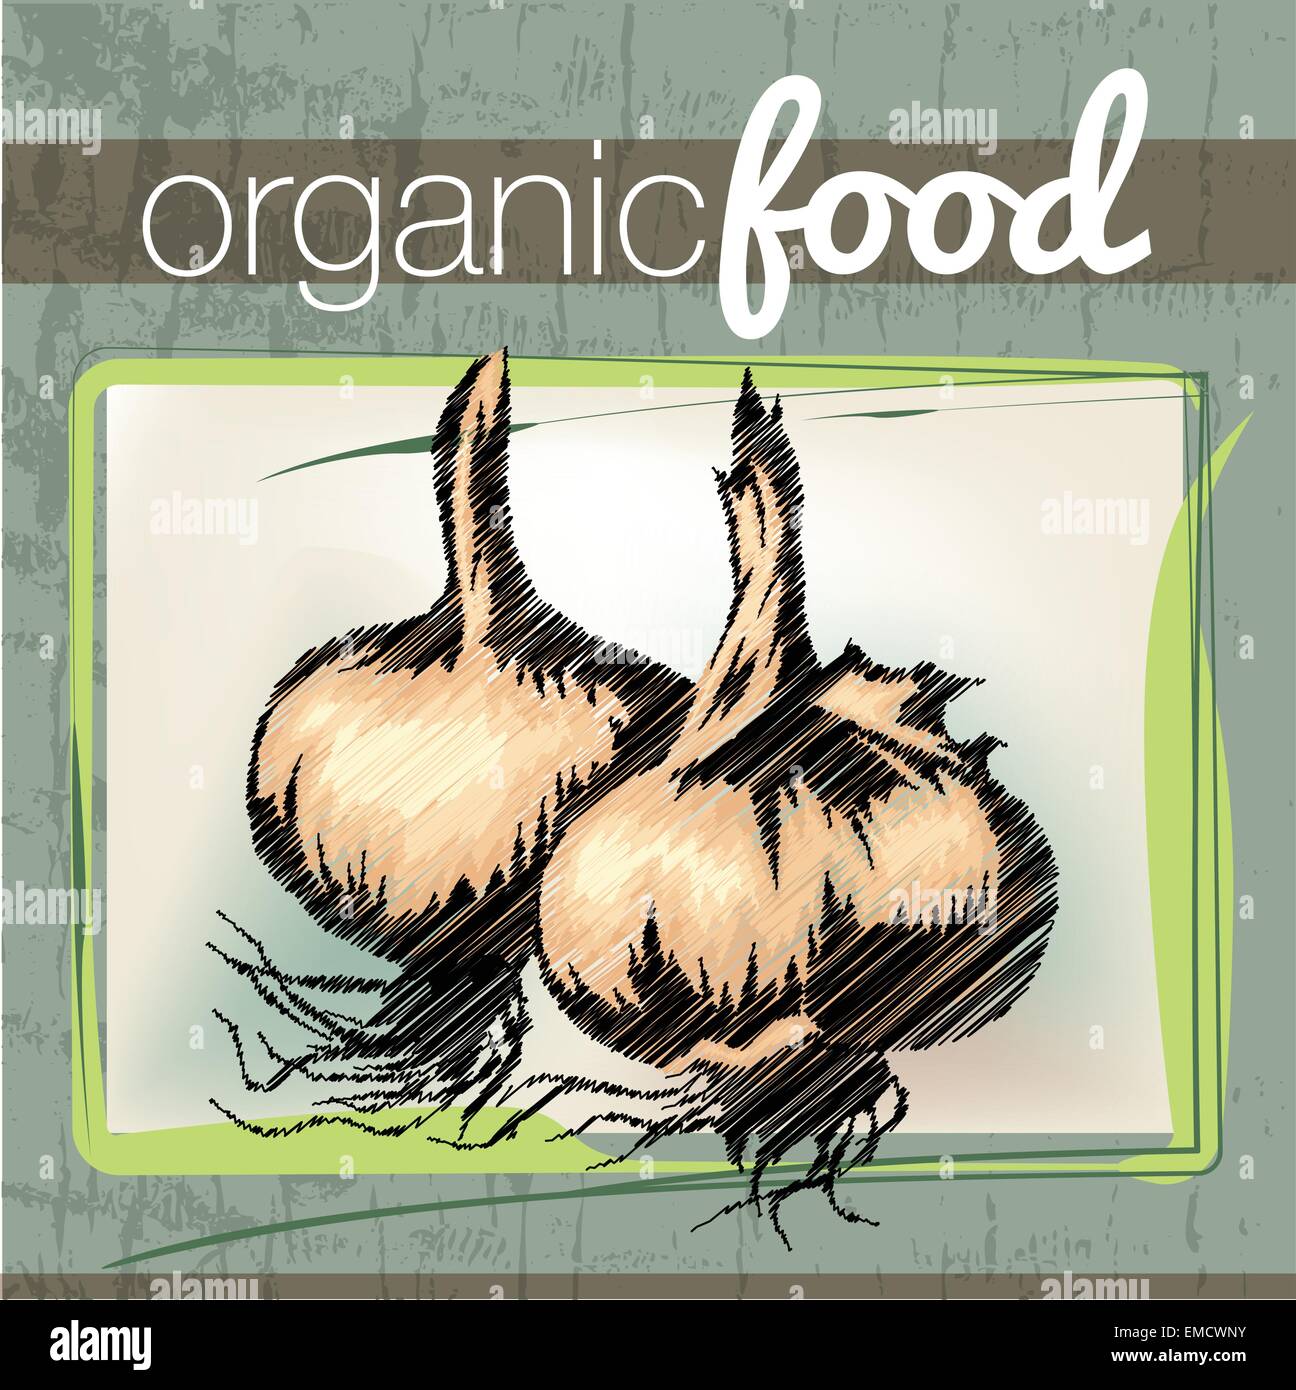 Organic Food illustration Stock Vector